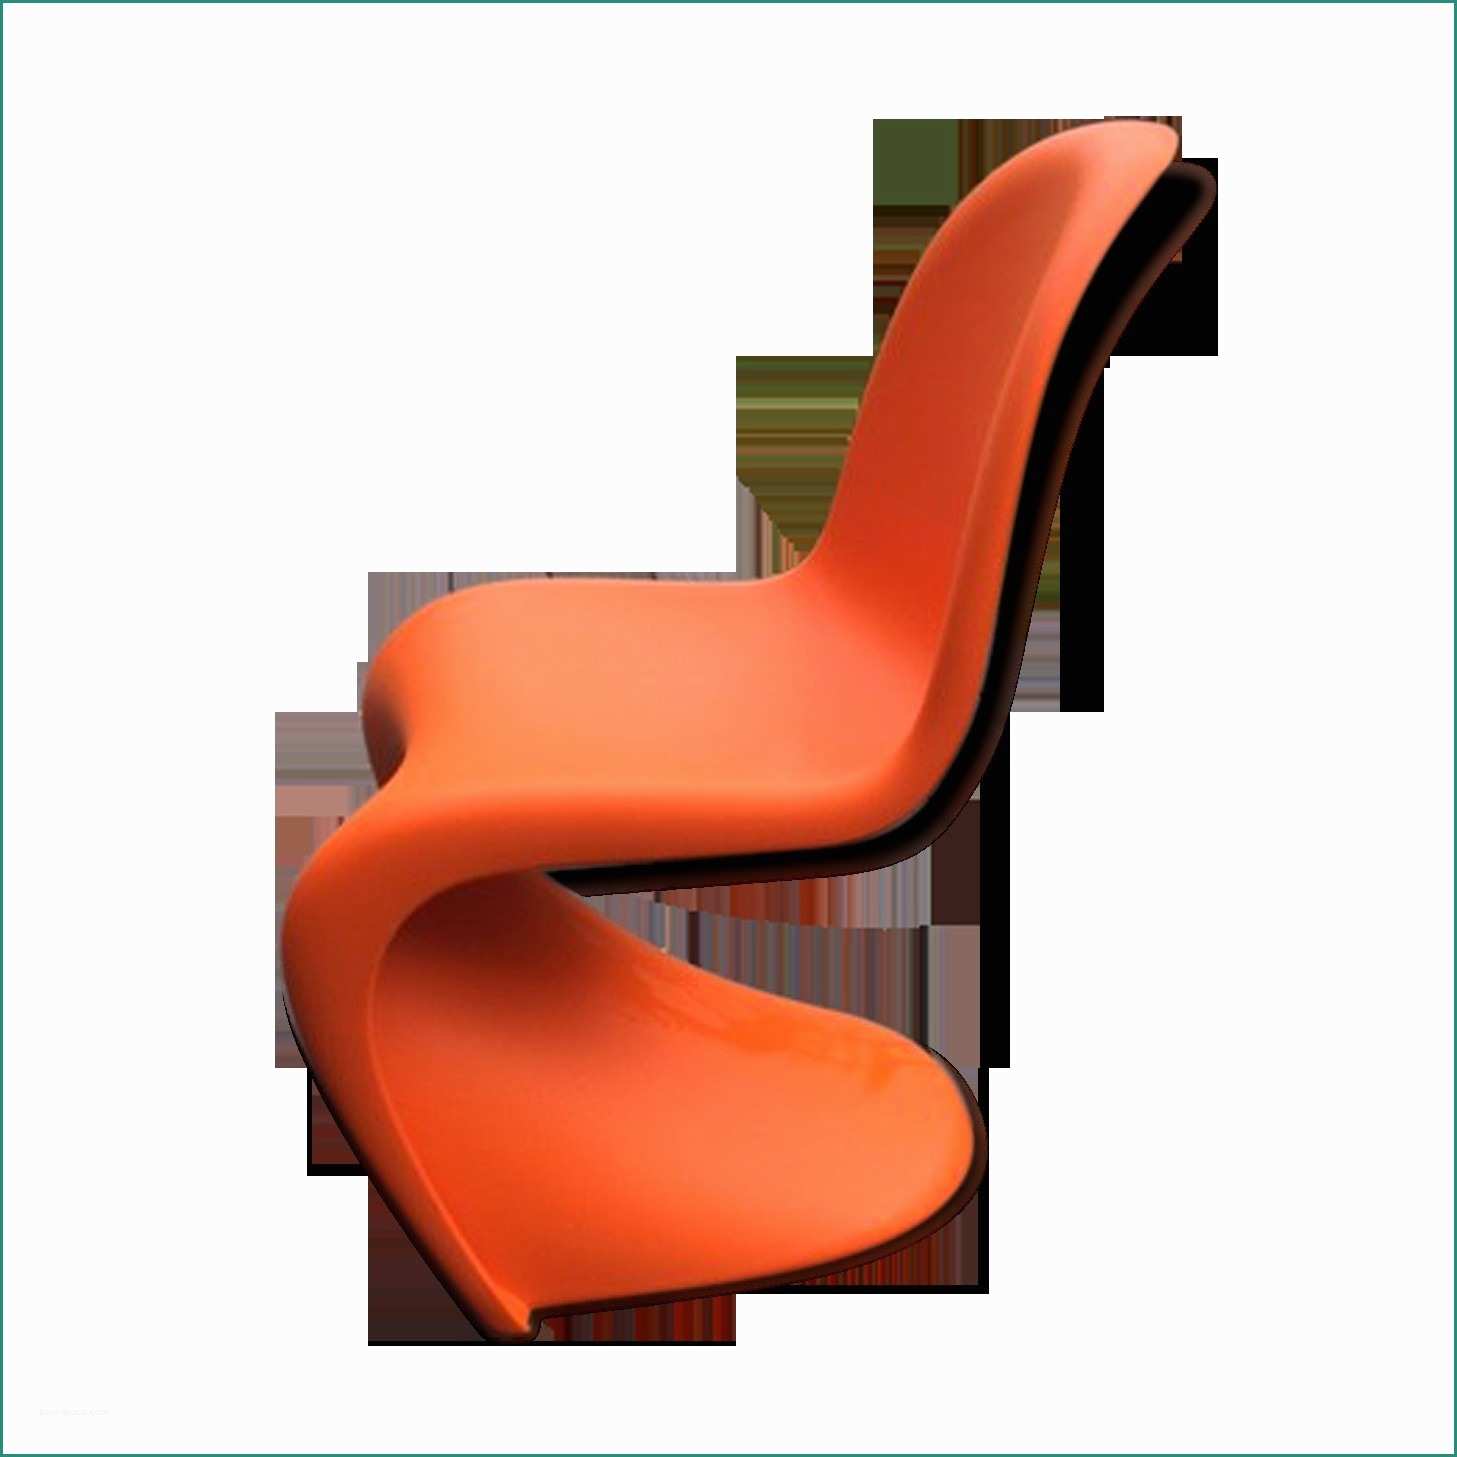 Verner Panton Chair E 30 Impressionnant Chaise Verner Panton